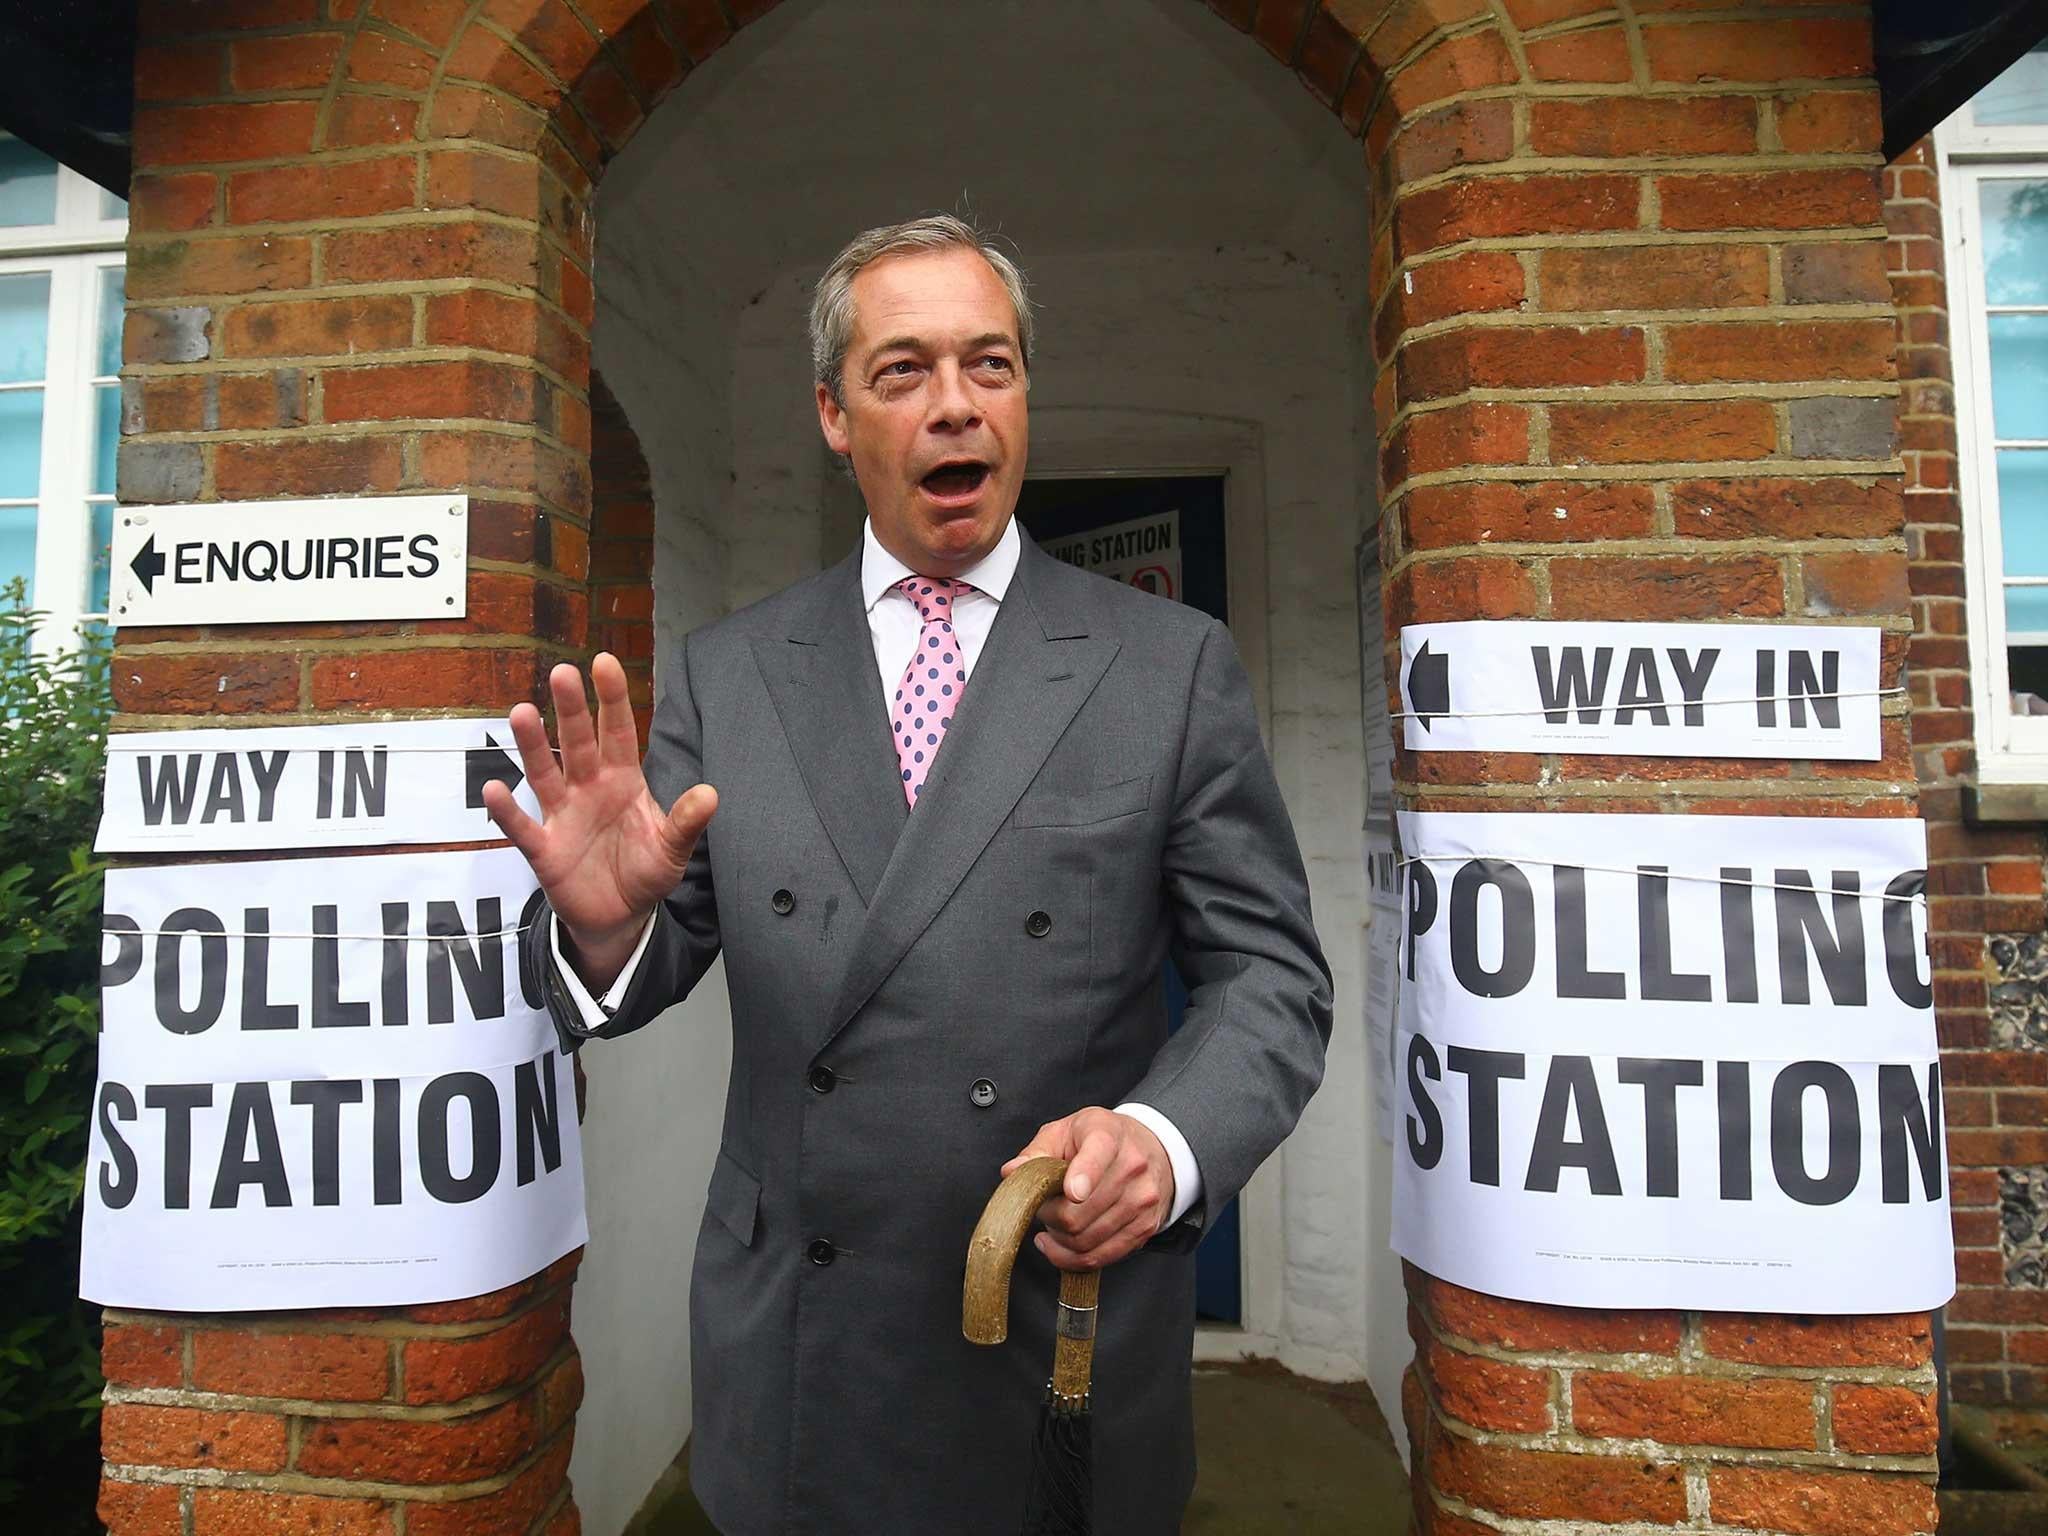 Nigel Farage leaves his polling station